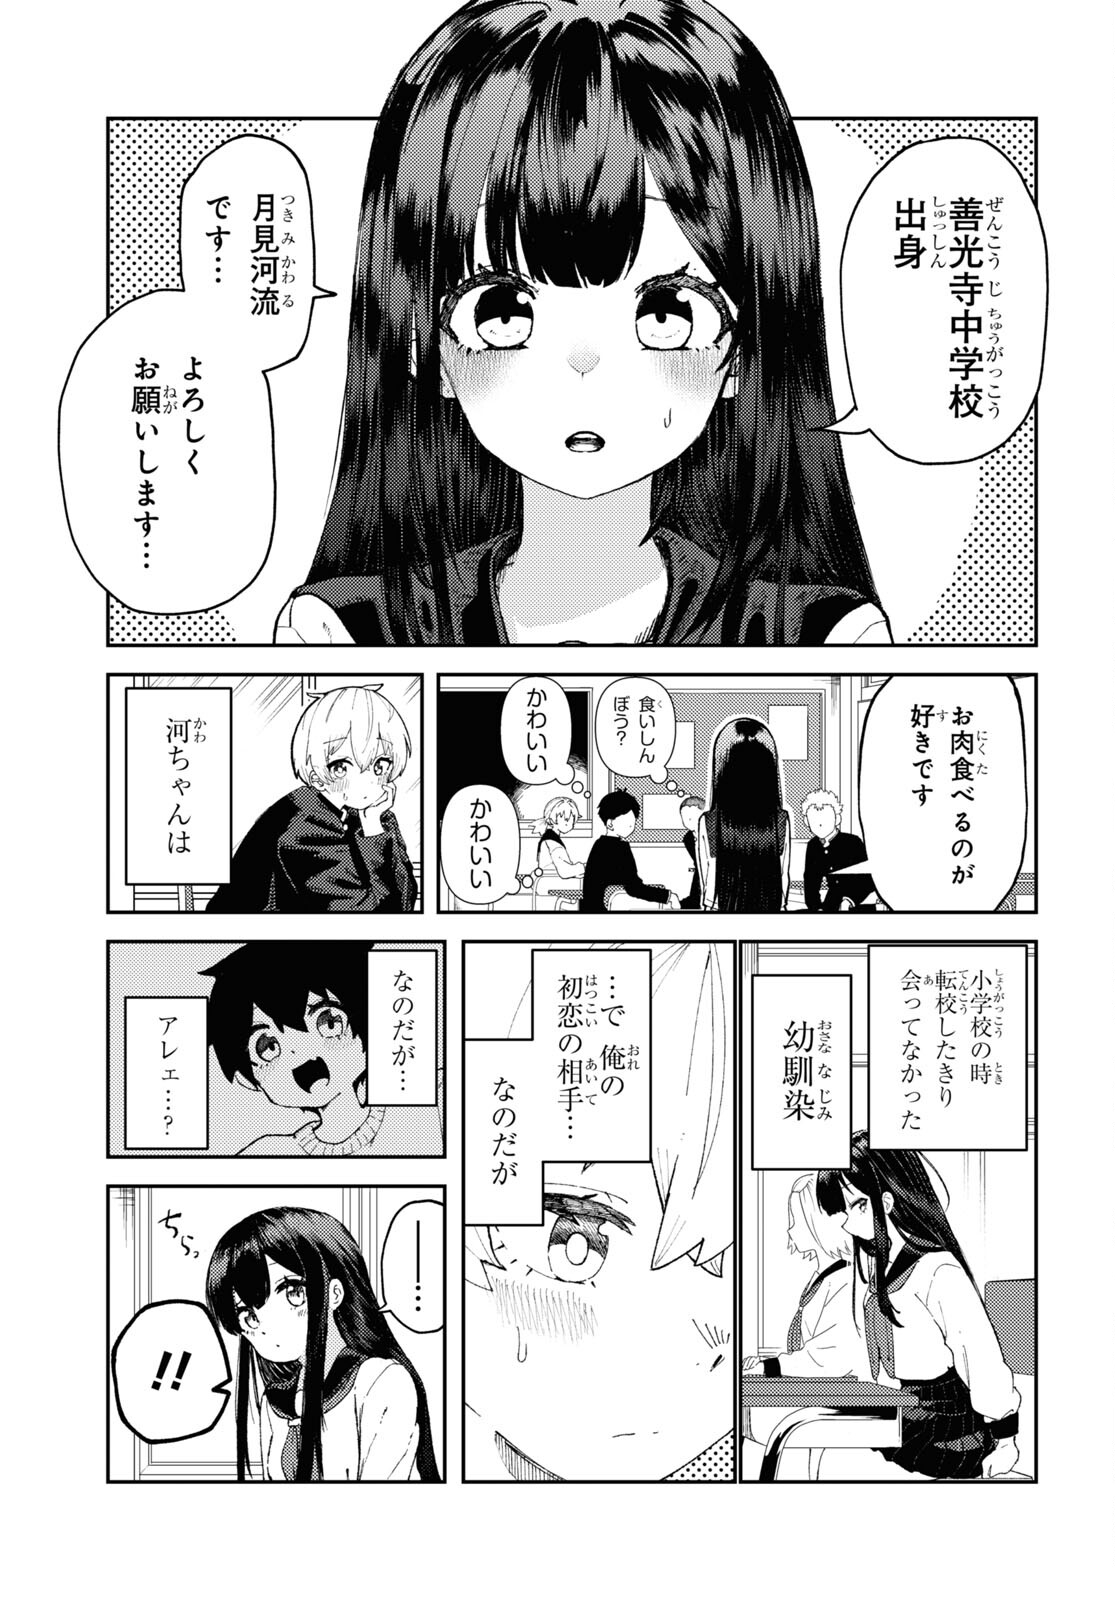 Garuru Girl - Chapter 1 - Page 6